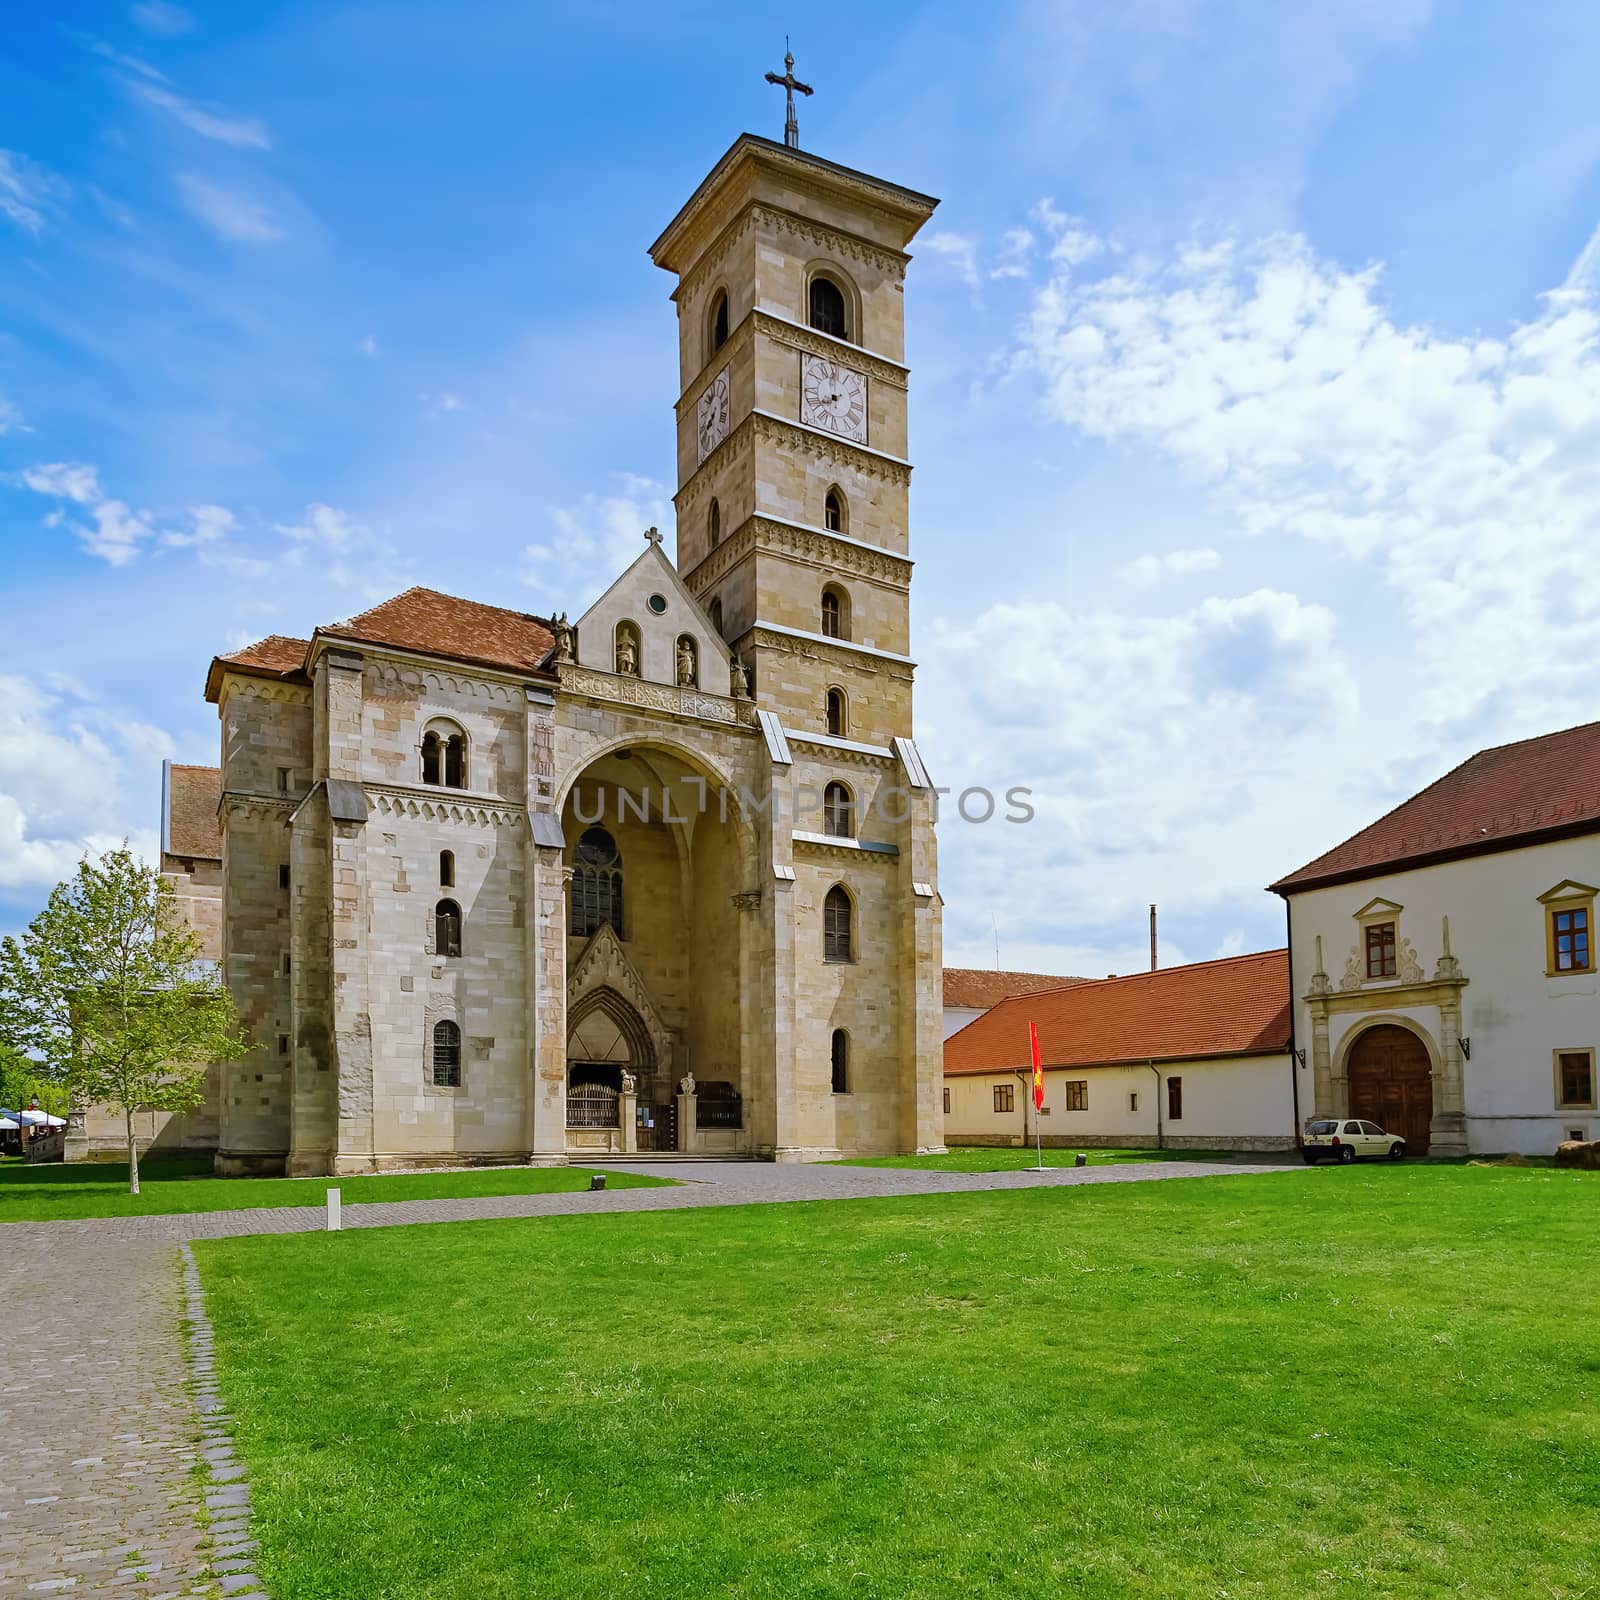 St. Michael's Cathedral in Alba Carolina Citadel, Alba Iulia, Romania